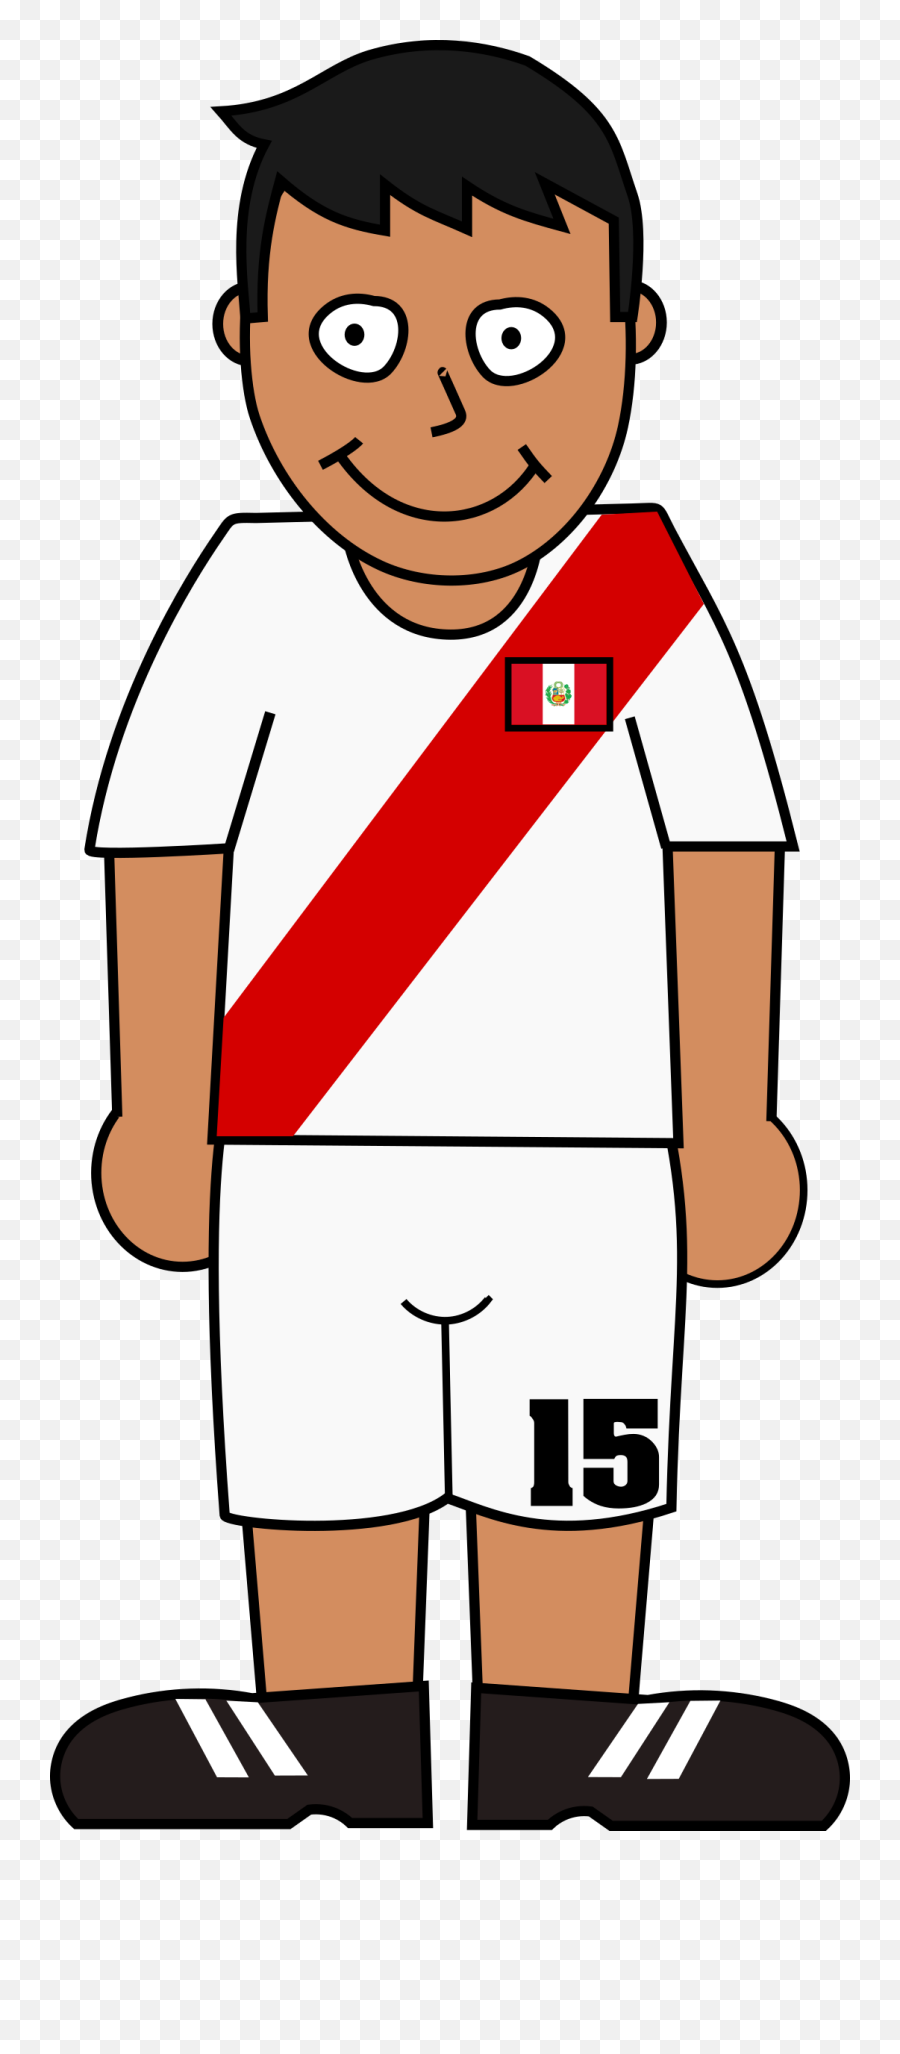 Football Player Peru - Football Player Emoji,Football Player Clipart